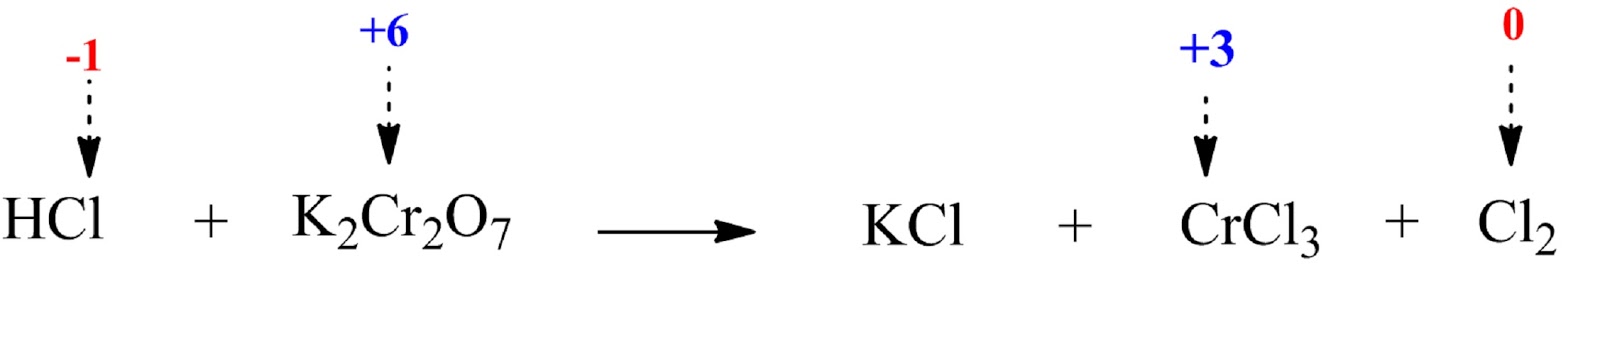 unbalanced reaction between HCl and K2Cr2O7